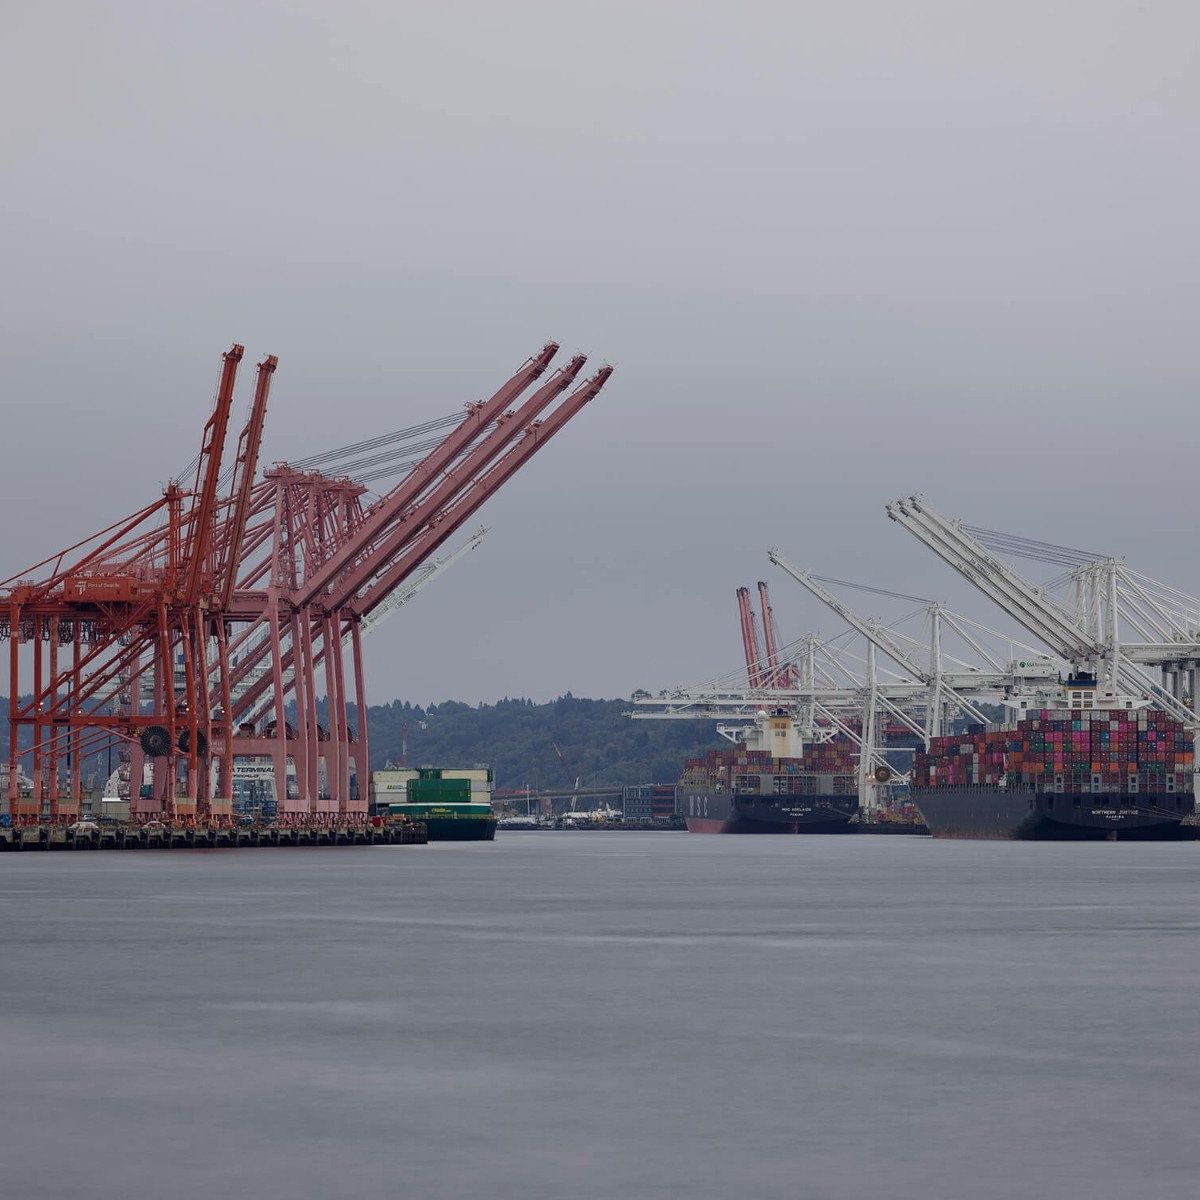 Cranes in the harbour